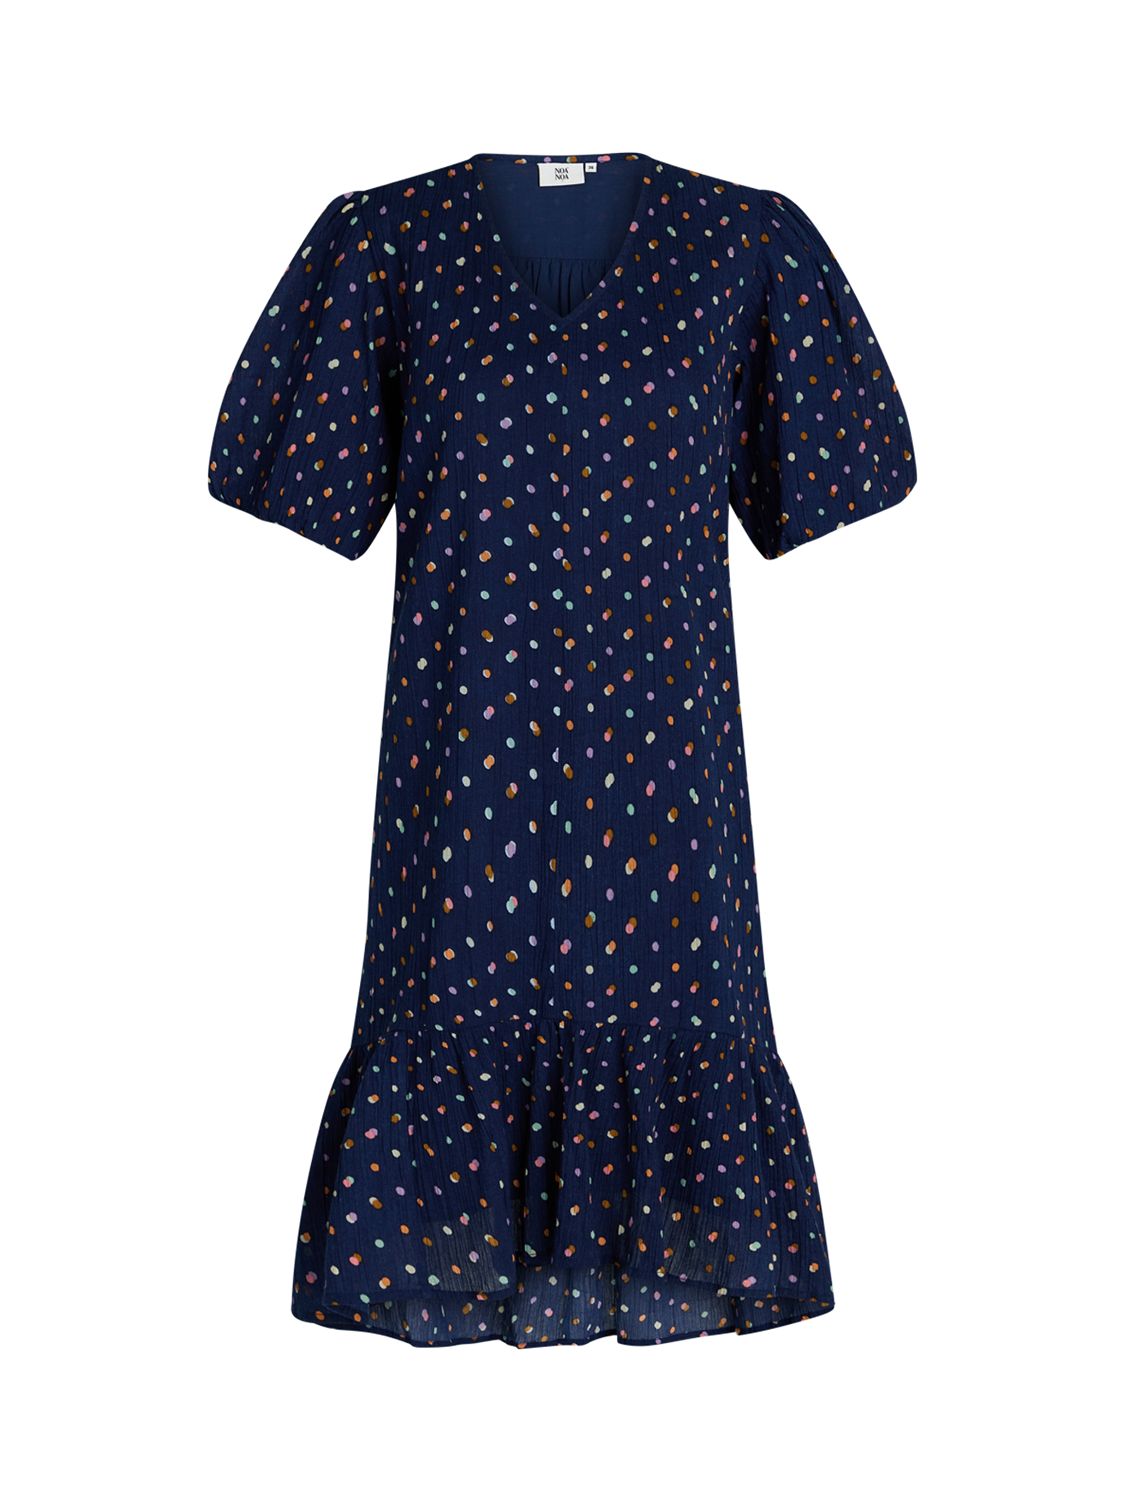 Noa Noa Nikita Short Sleeve Midi Dress, Blue/Multi, 8